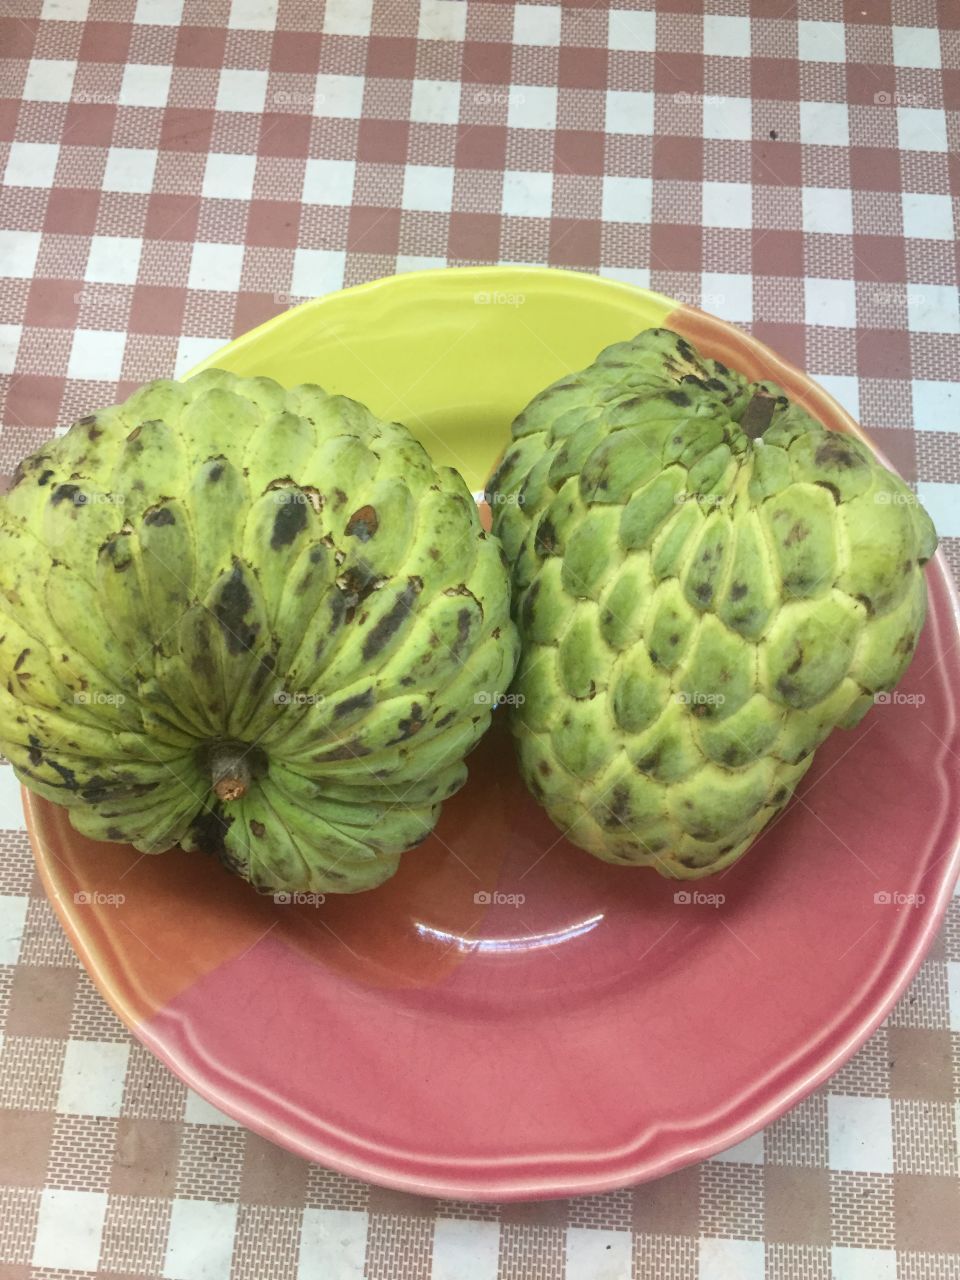 Mom bought home jackfruit 